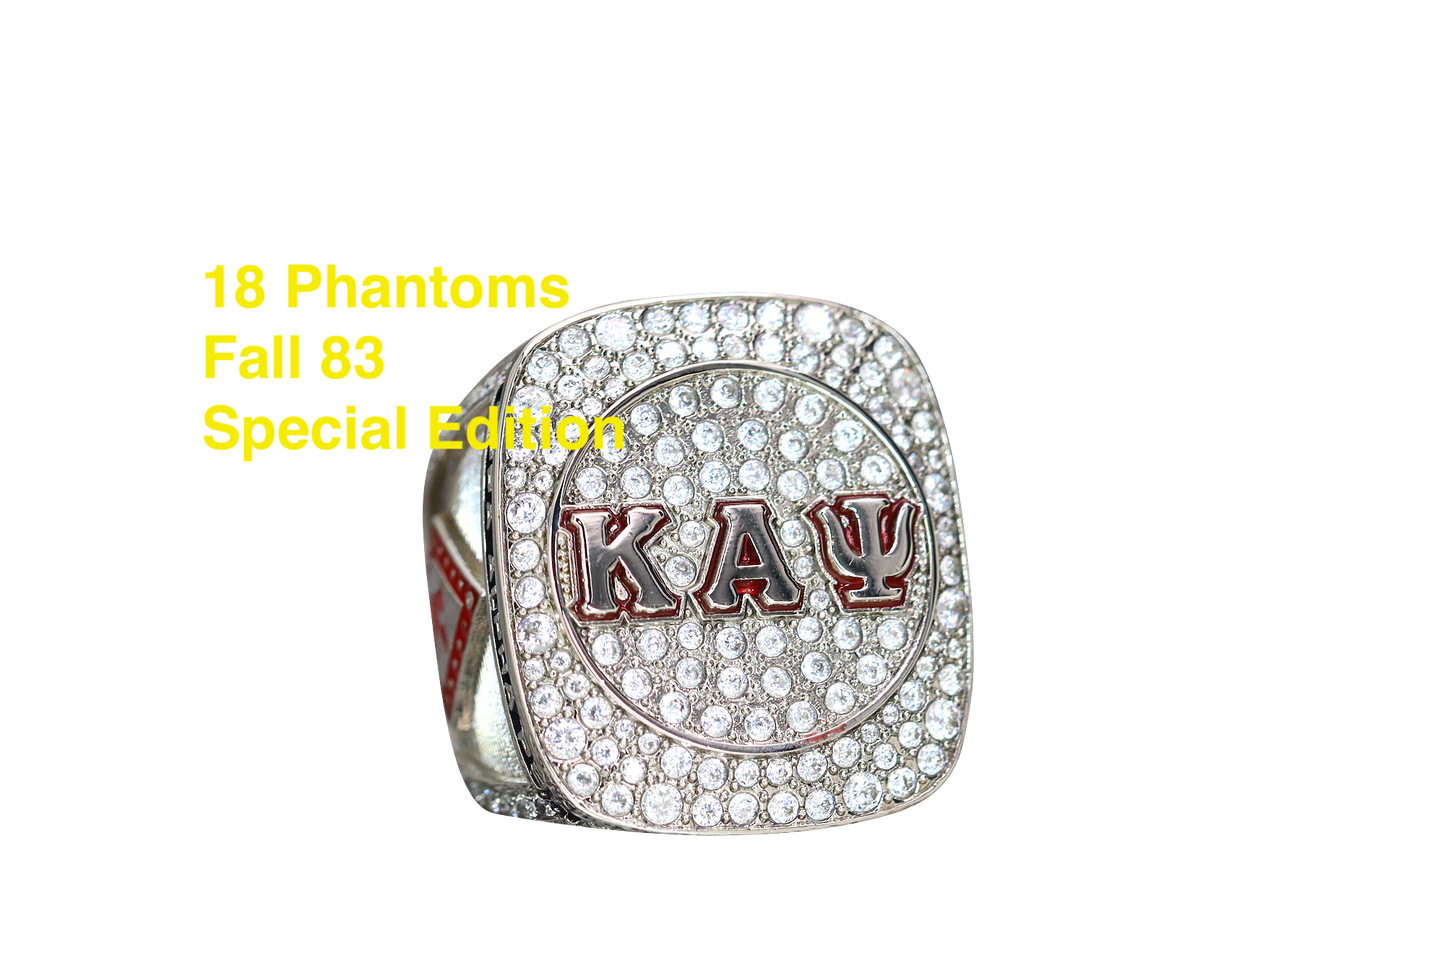 Kappa Alpha Psi Fraternity Ring (ΚΑΨ) - Shine Series Special "18 Phantoms" Version